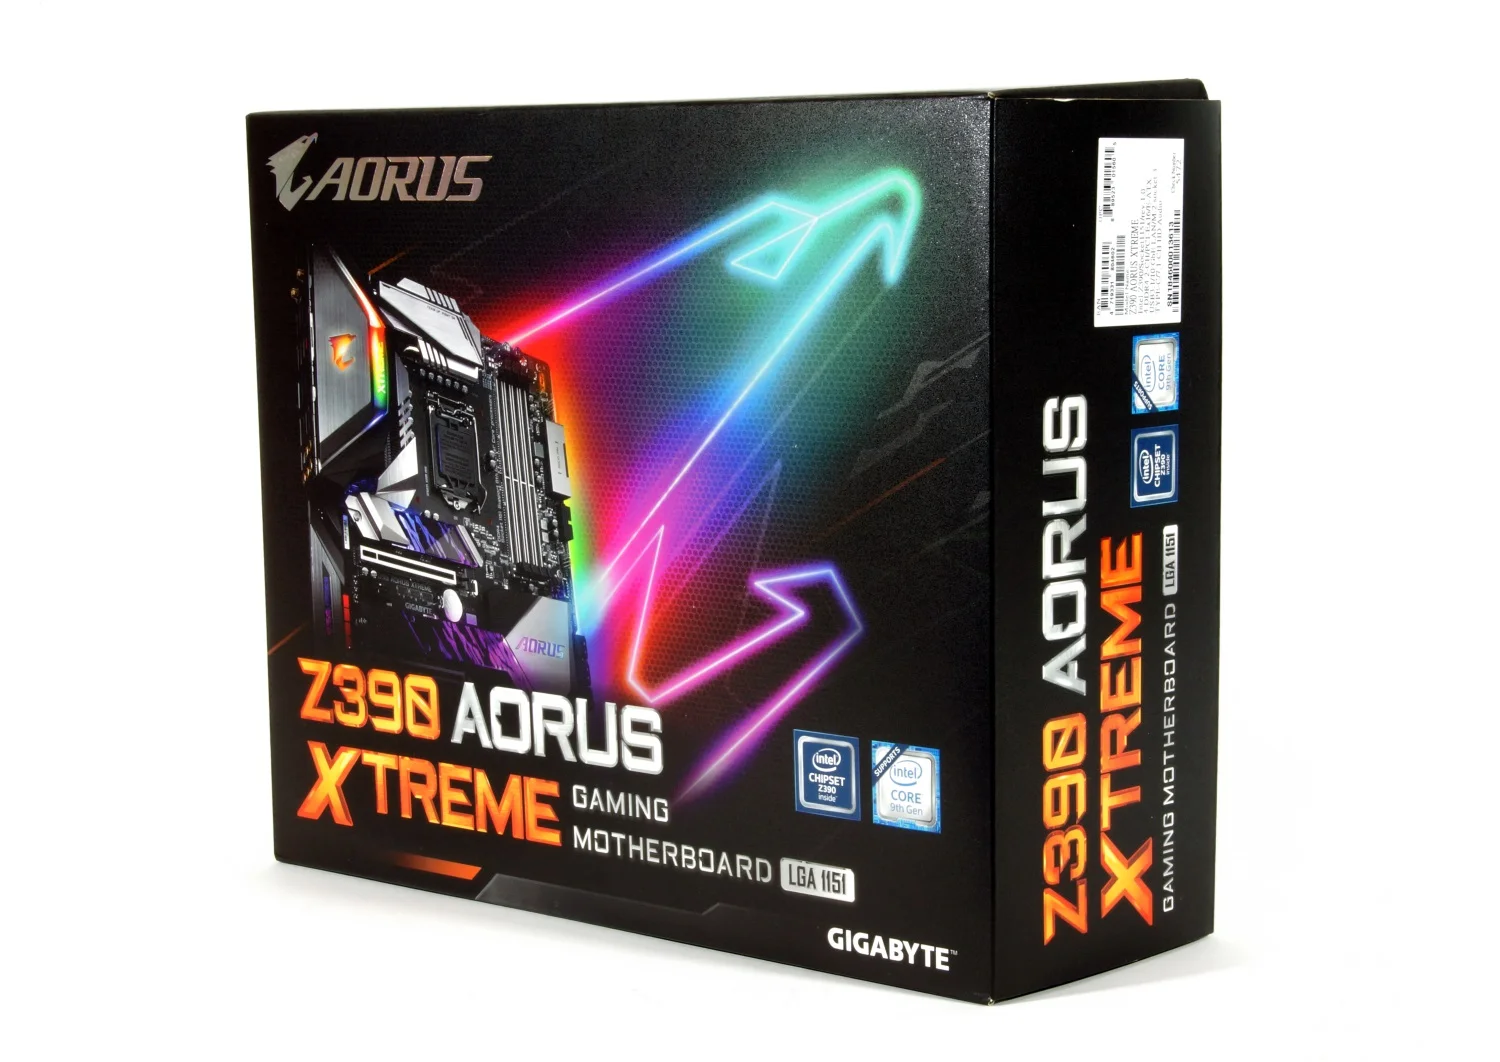 Тестируем видеокарту GeForce RTX 2080 Ti AORUS Xtreme и материнскую плату GIGABYTE Z390 AORUS Xtreme - фото 1